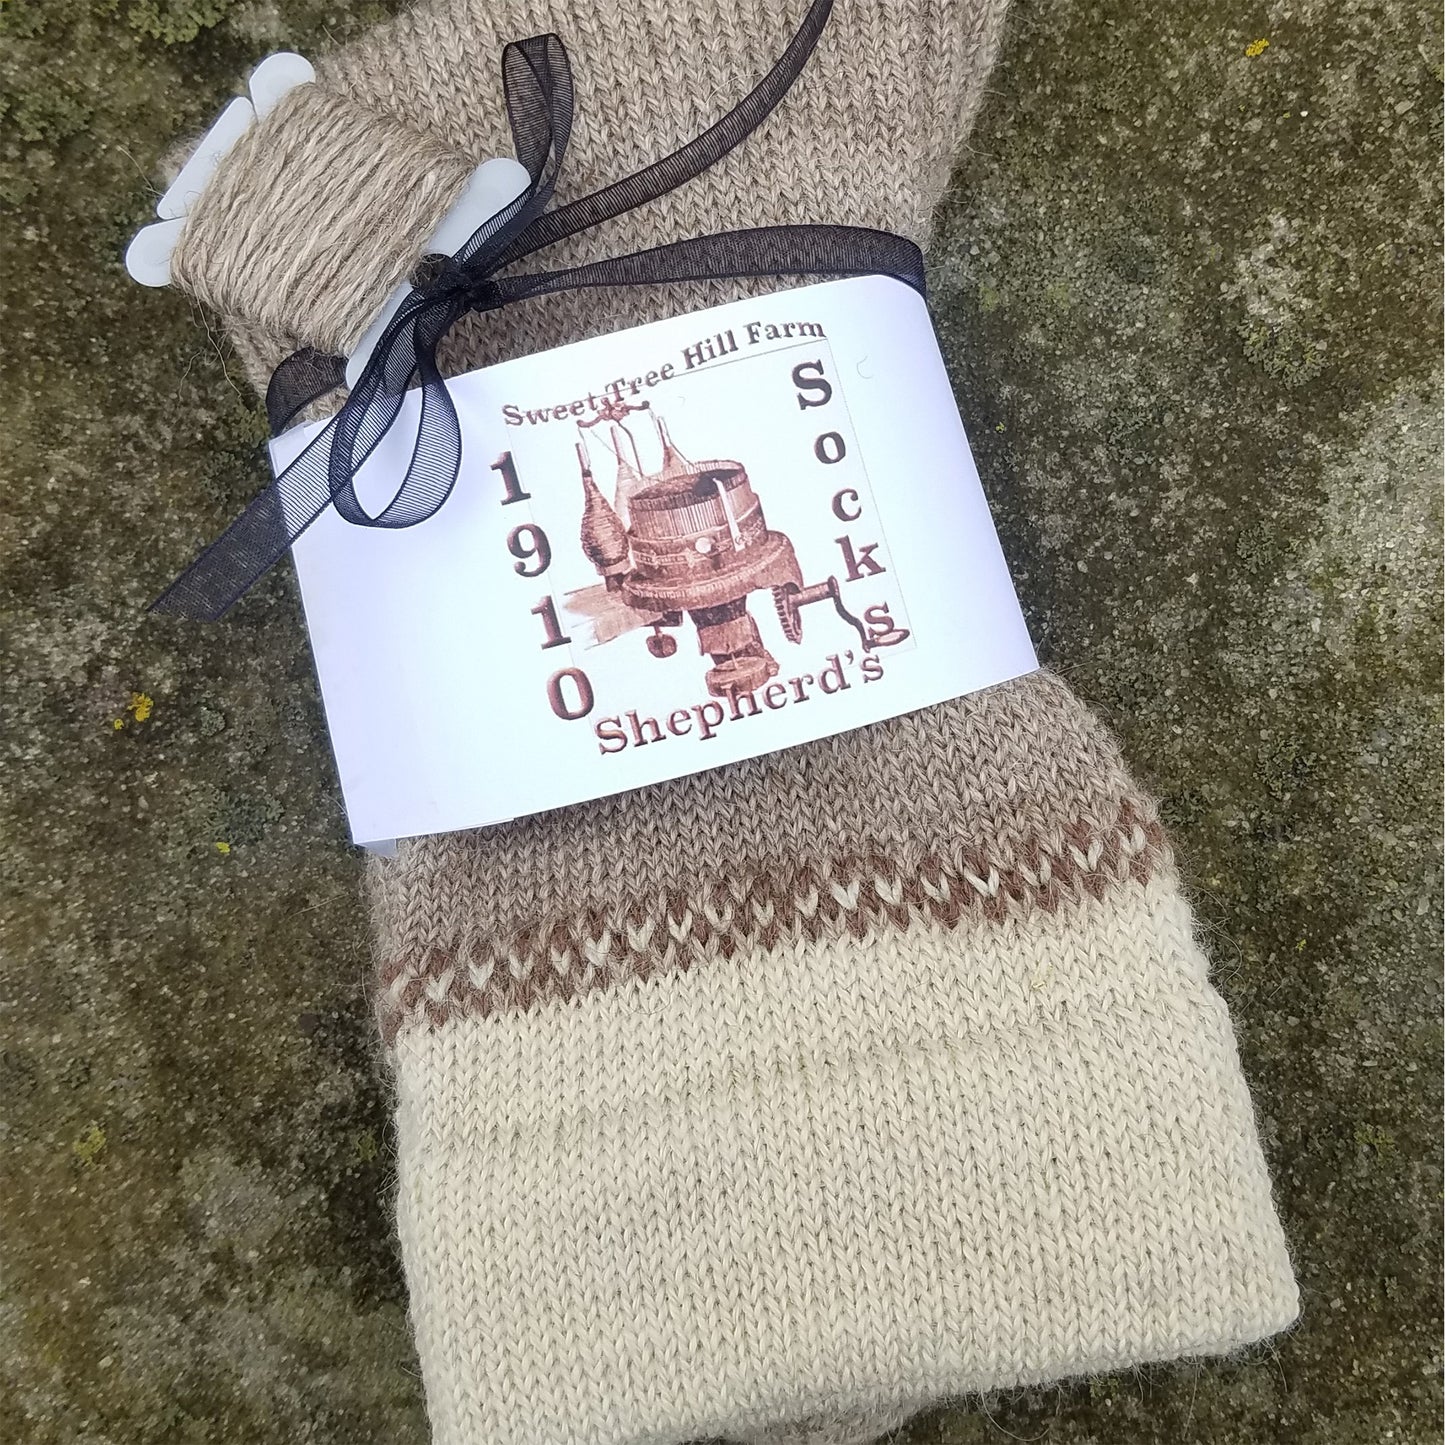 United States, Kathleen Oliver / Sweet Tree Hill Farm, Shepherd’s Socks in Shetland Wool with Dappled Fair Isle Cuff